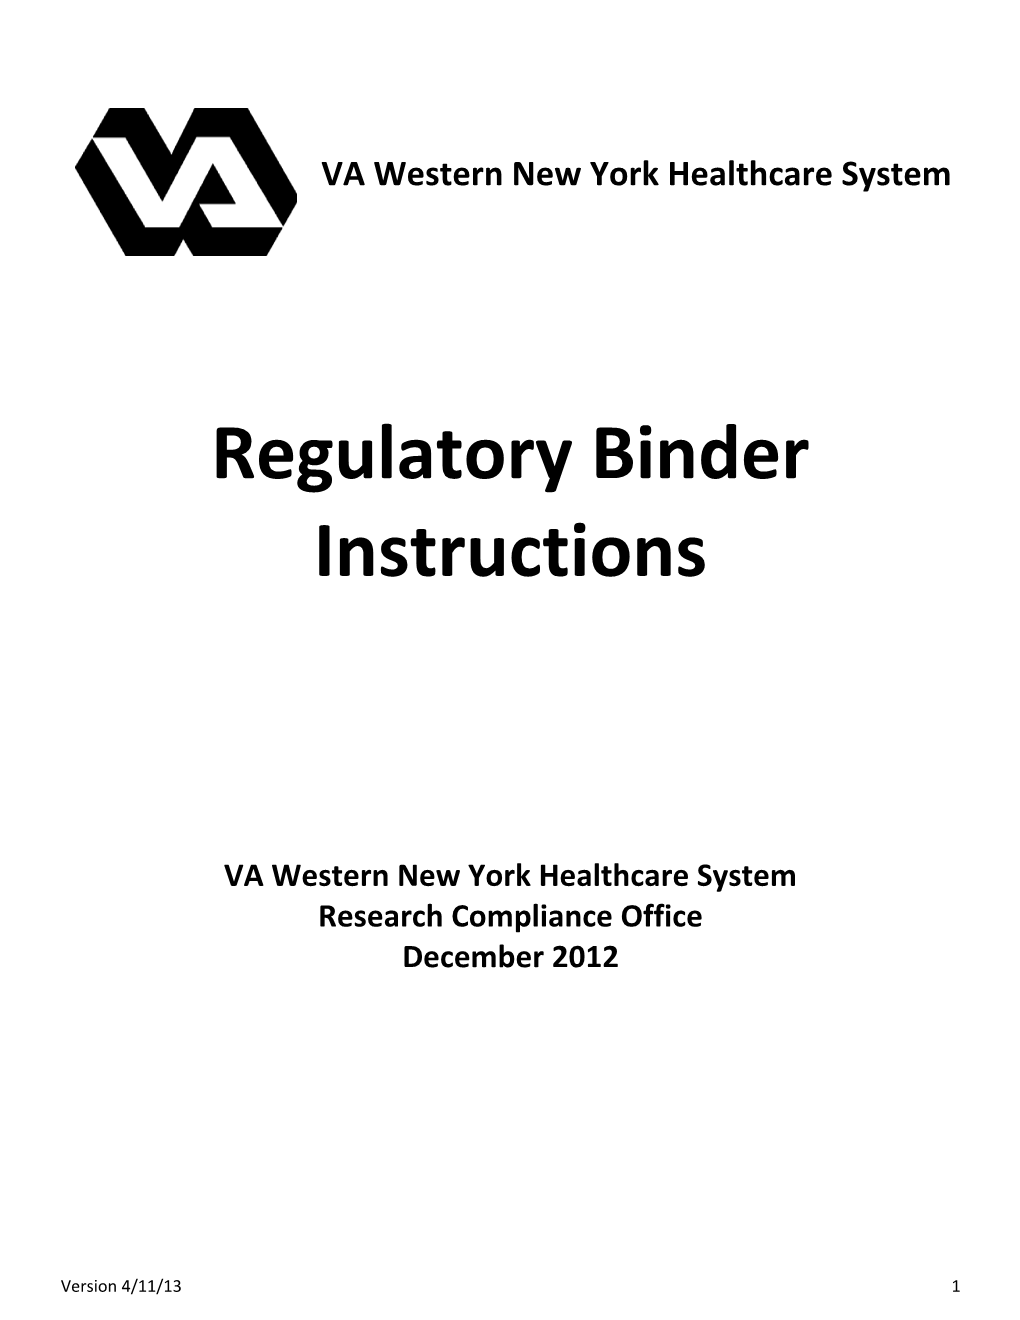 VA Western New York Healthcare System s1